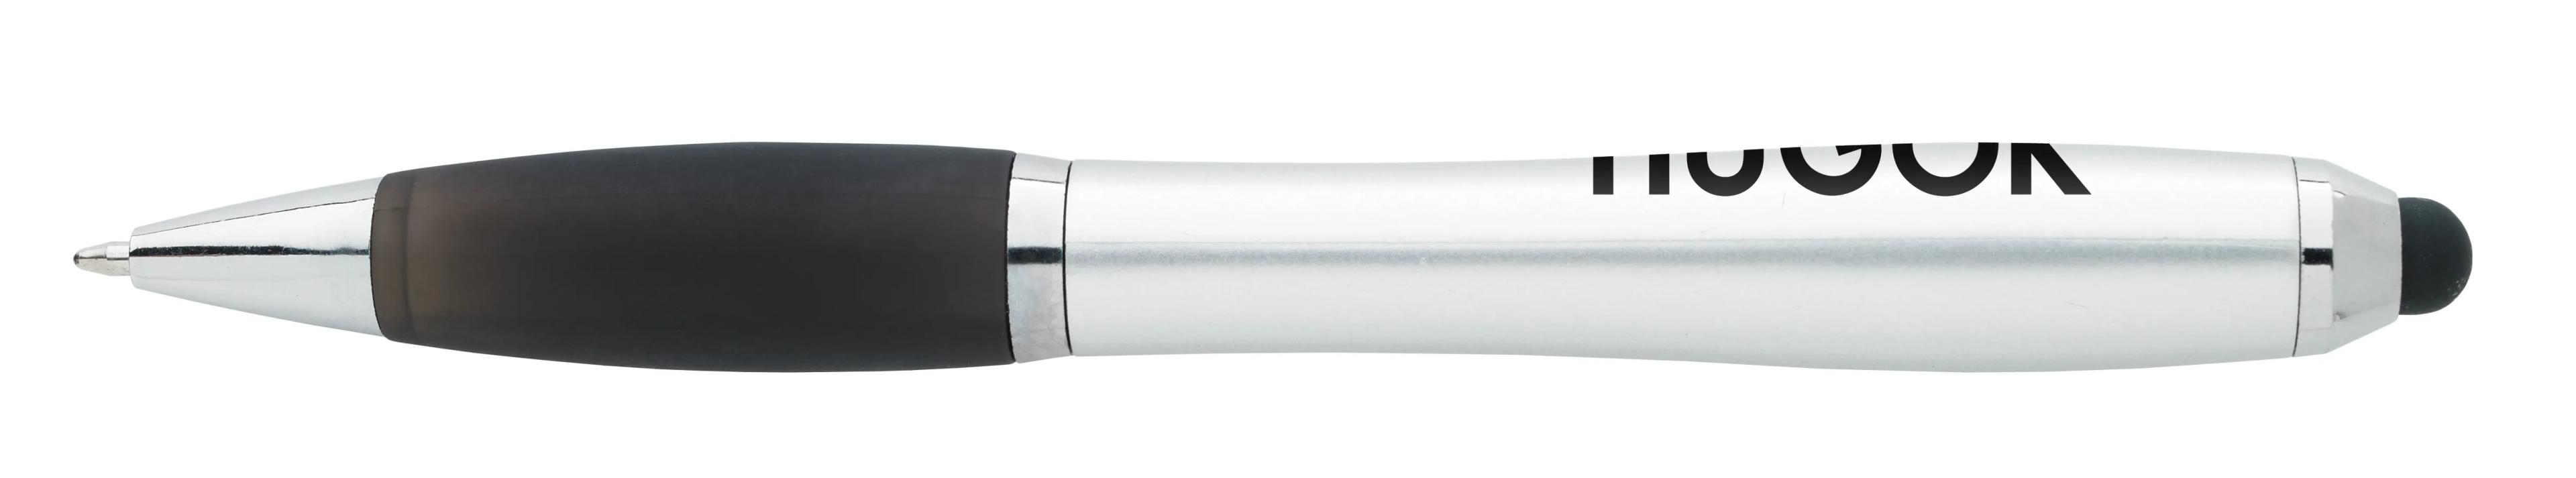 Ion Silver Stylus Pen 13 of 17